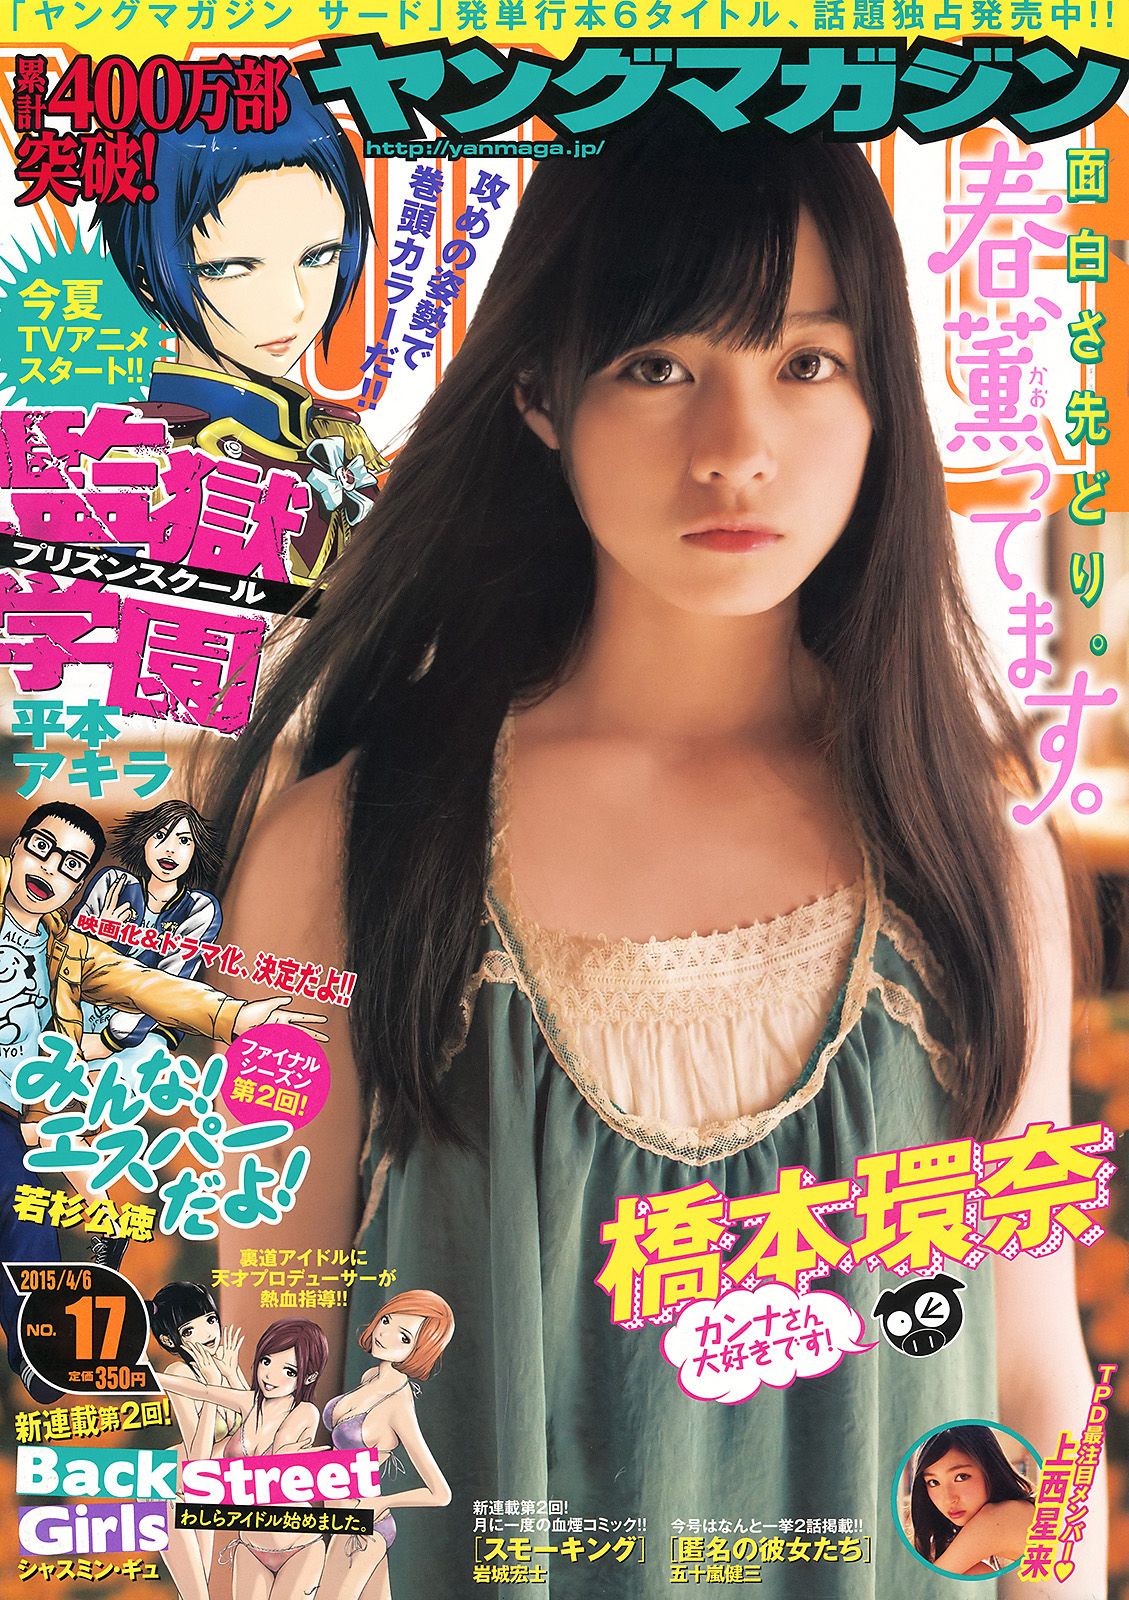 [Young Magazine] 2015.03 No.17 橋本環奈 上西星来0